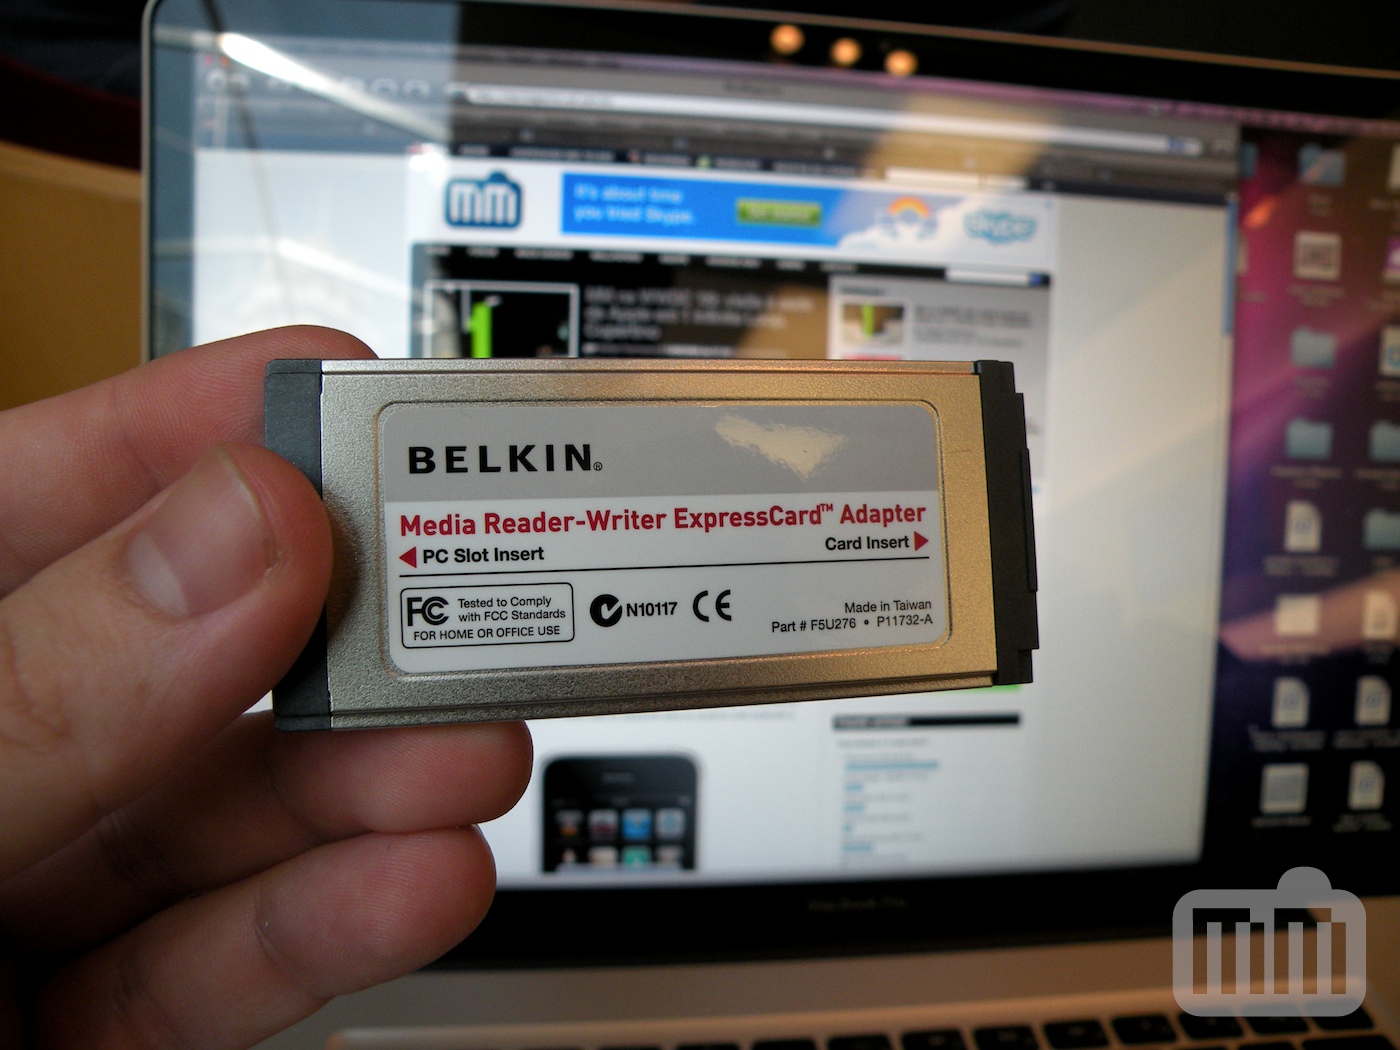 Review: Media Reader ExpressCard Adapter, by Belkin